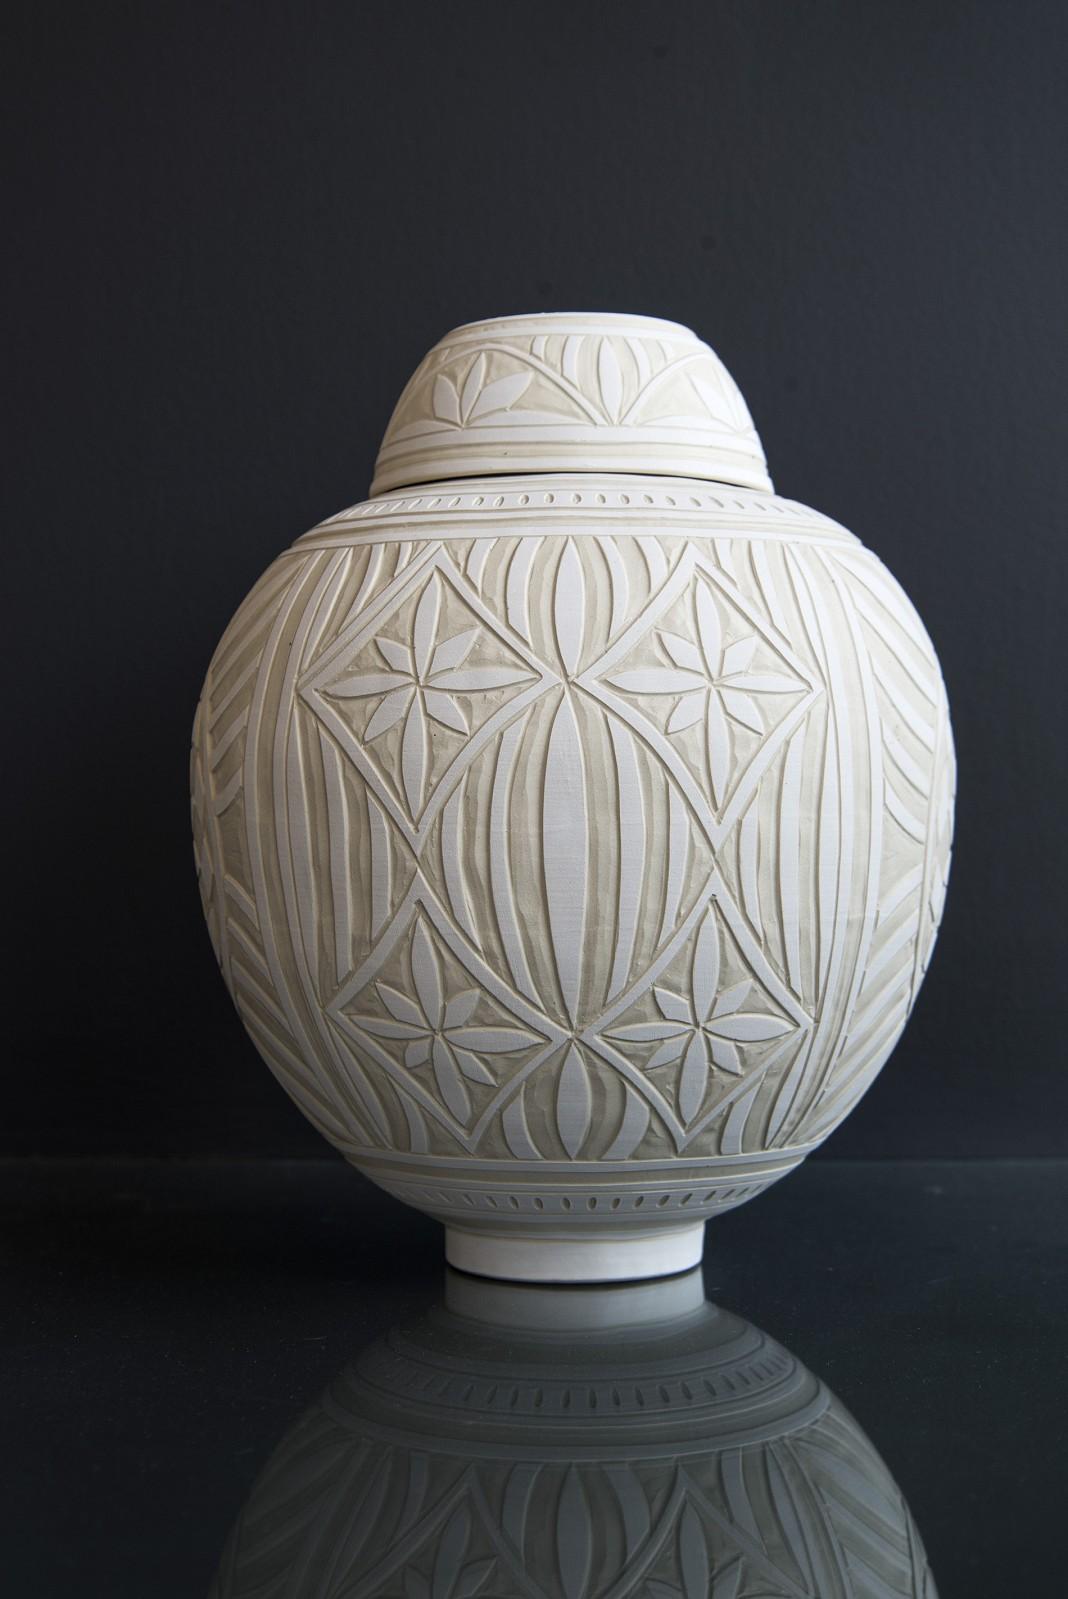 Medium Engraved Ginger Jar - decorative, detailed, handcrafted, porcelain vessel - Contemporary Sculpture by Loren Kaplan